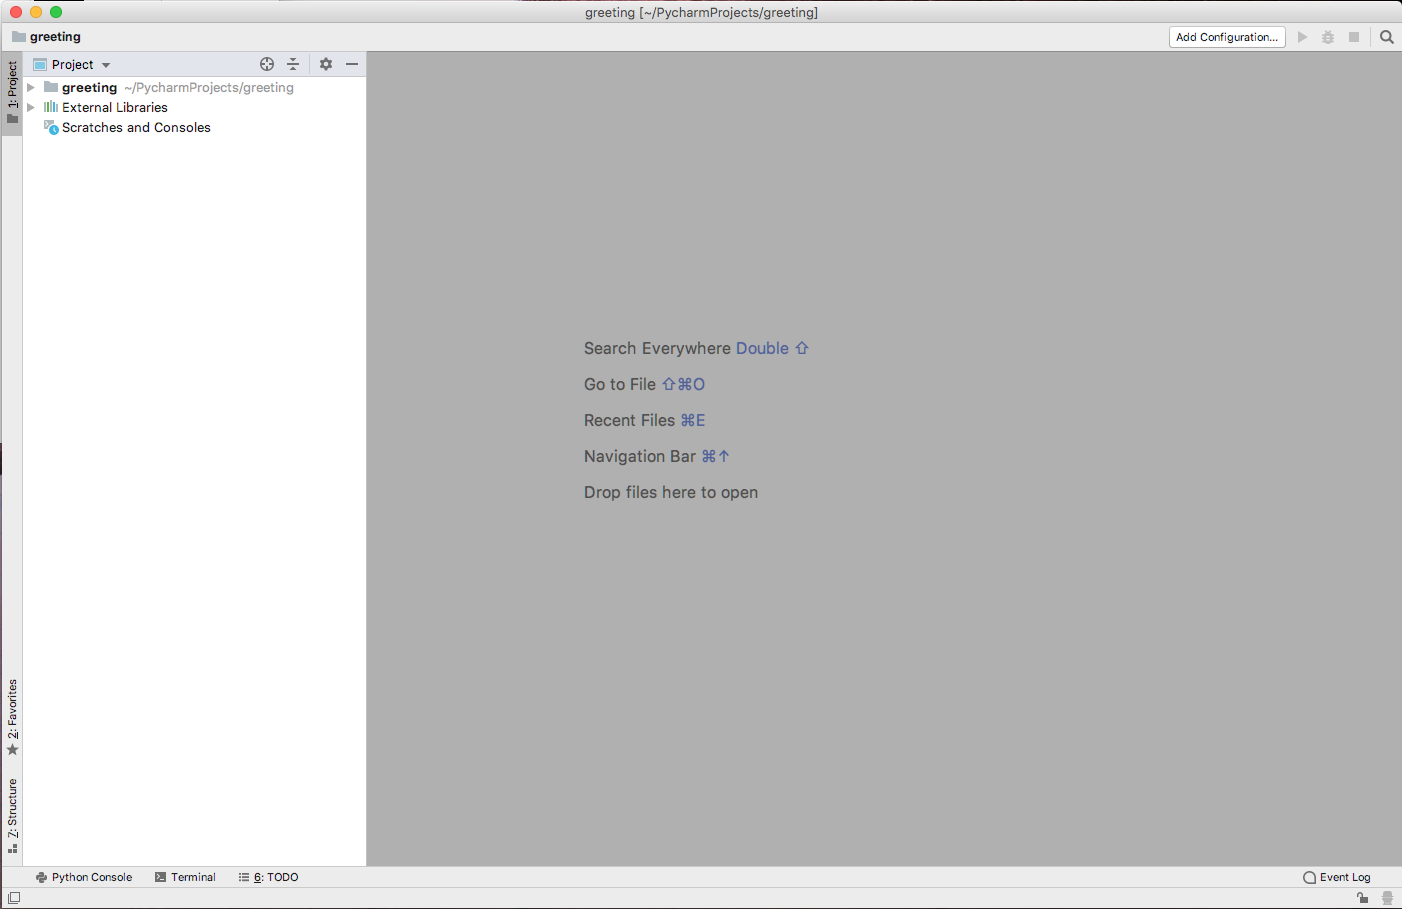 PyCharm blank project screen